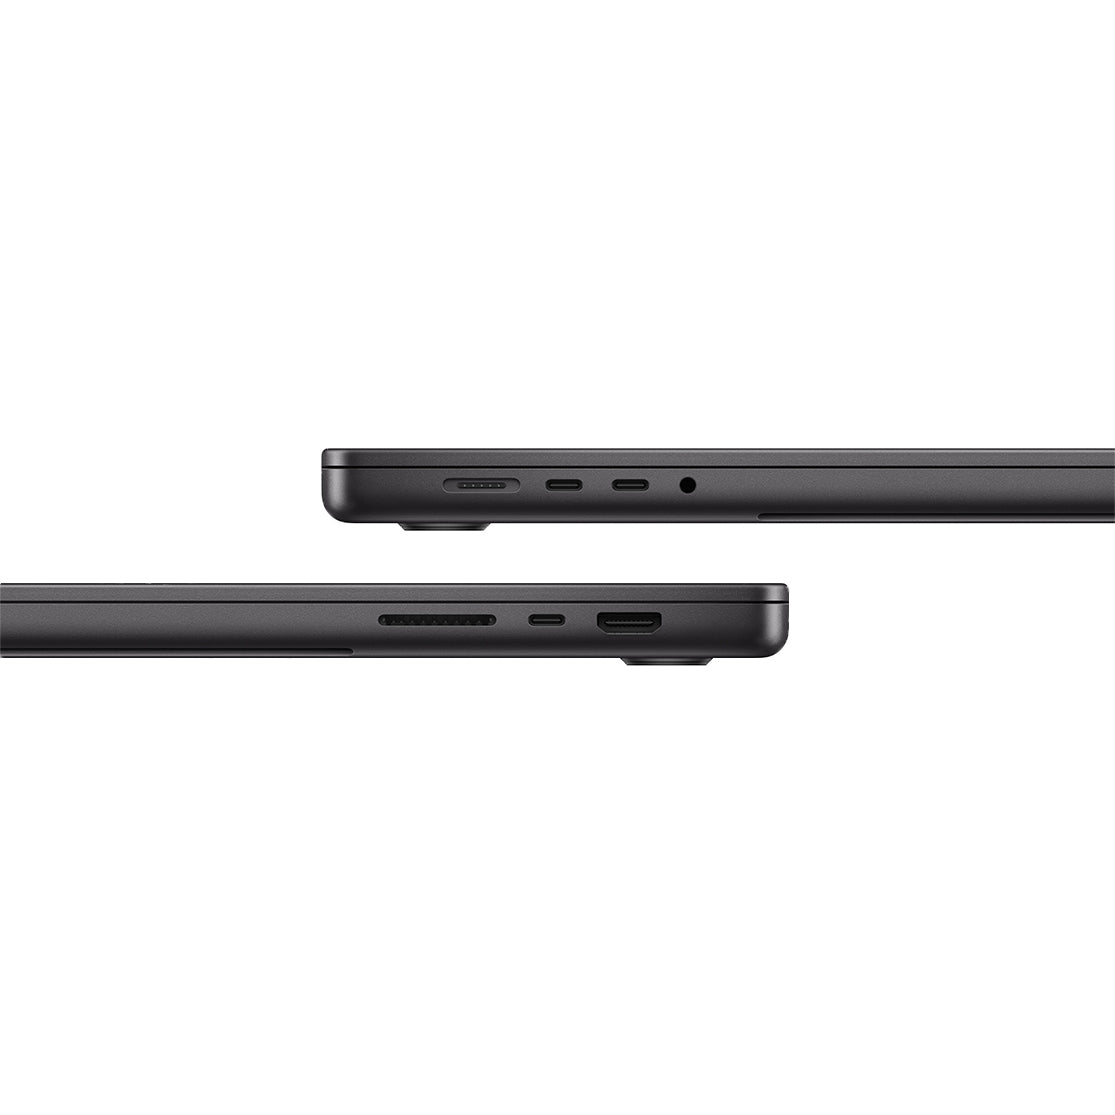 Space black elegance, M3 MacBook: Versatile ports